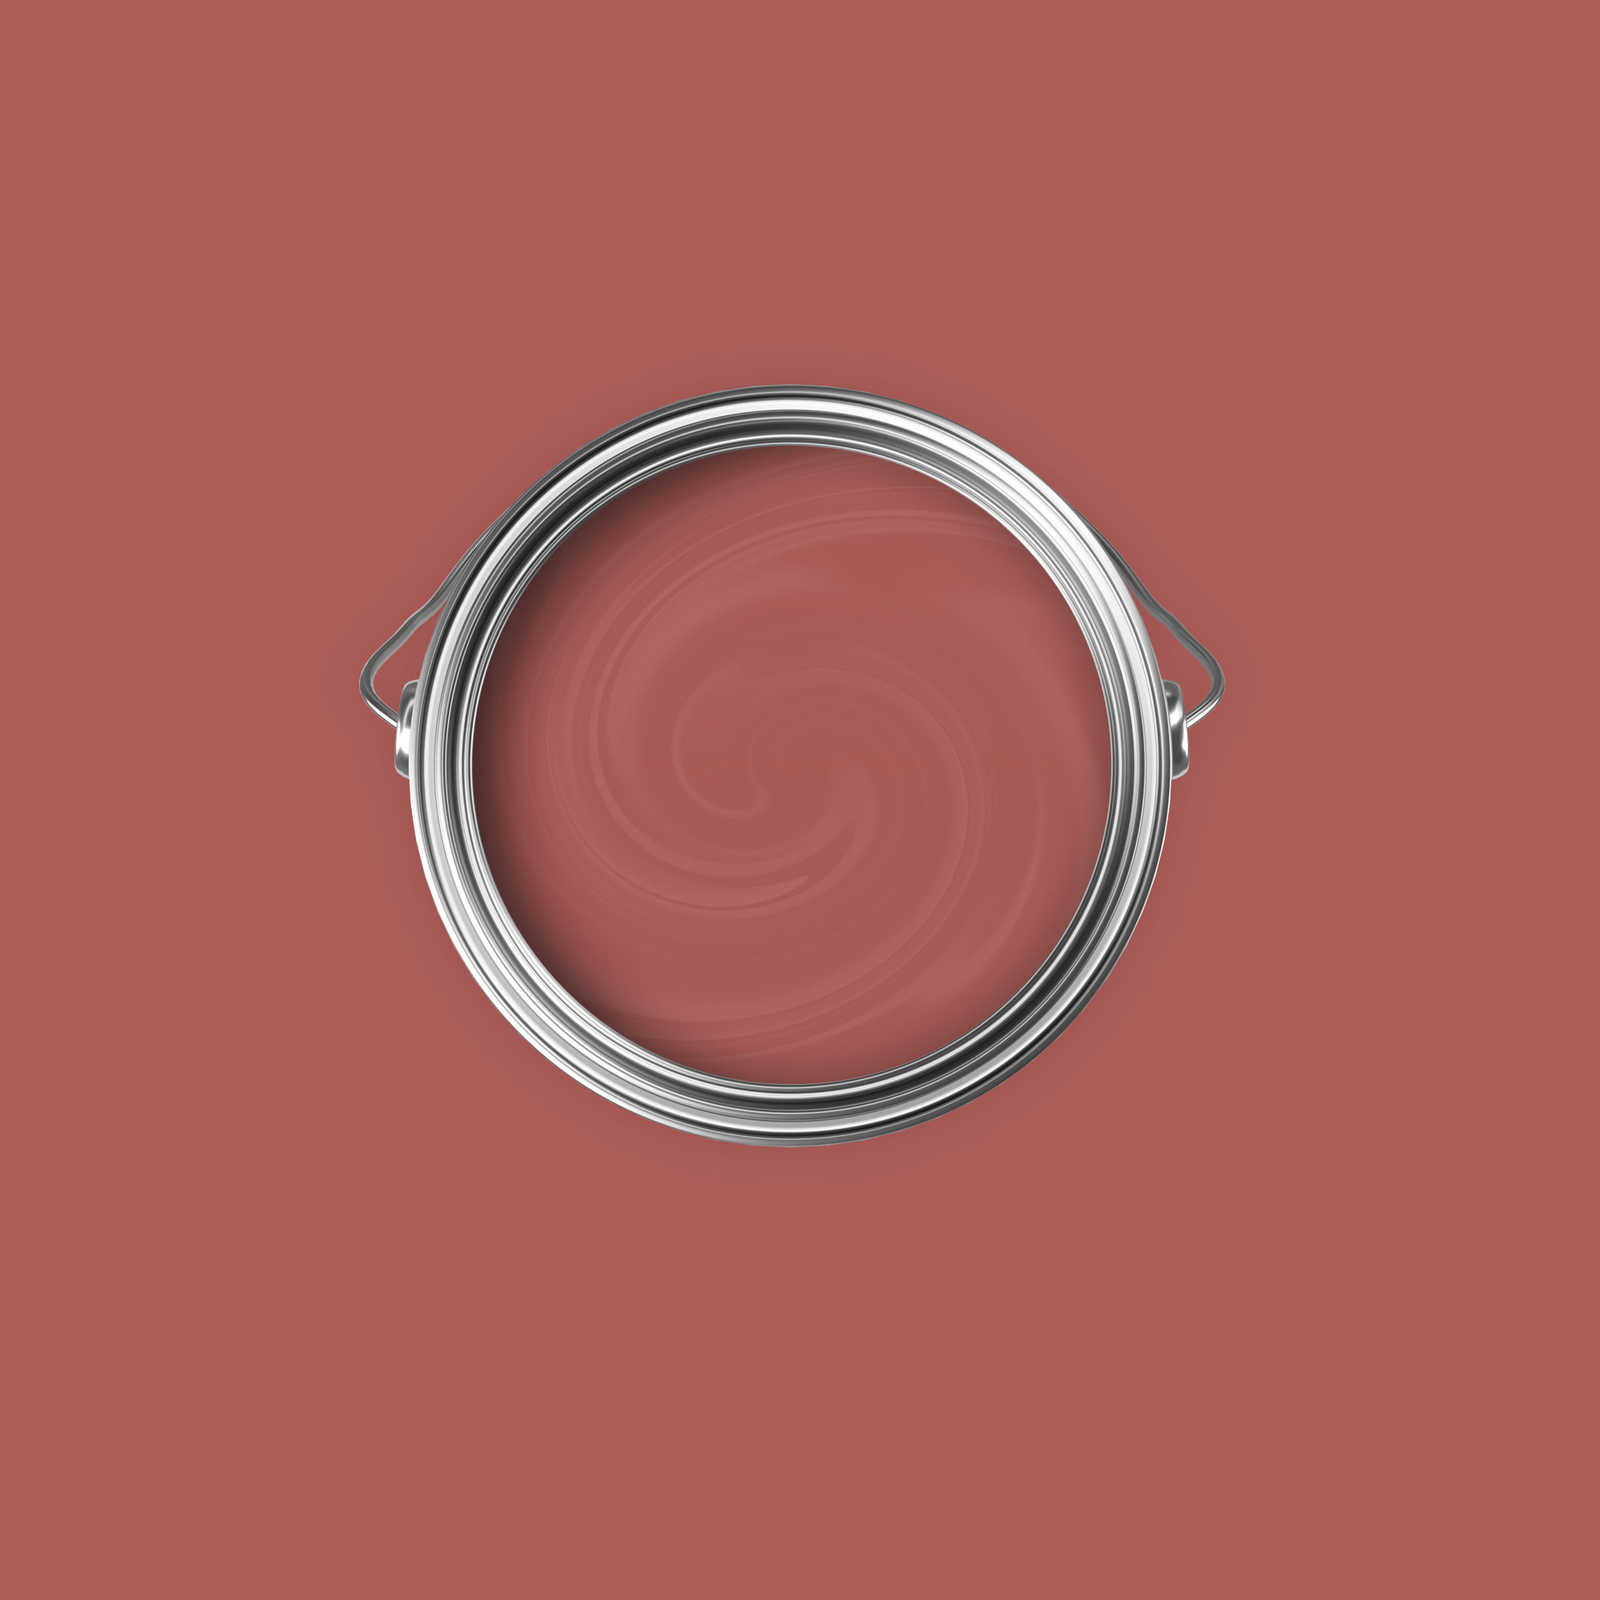             Premium Wall Paint harmonious dark pink »Luxury Lipstick« NW1005 – 2.5 litre
        